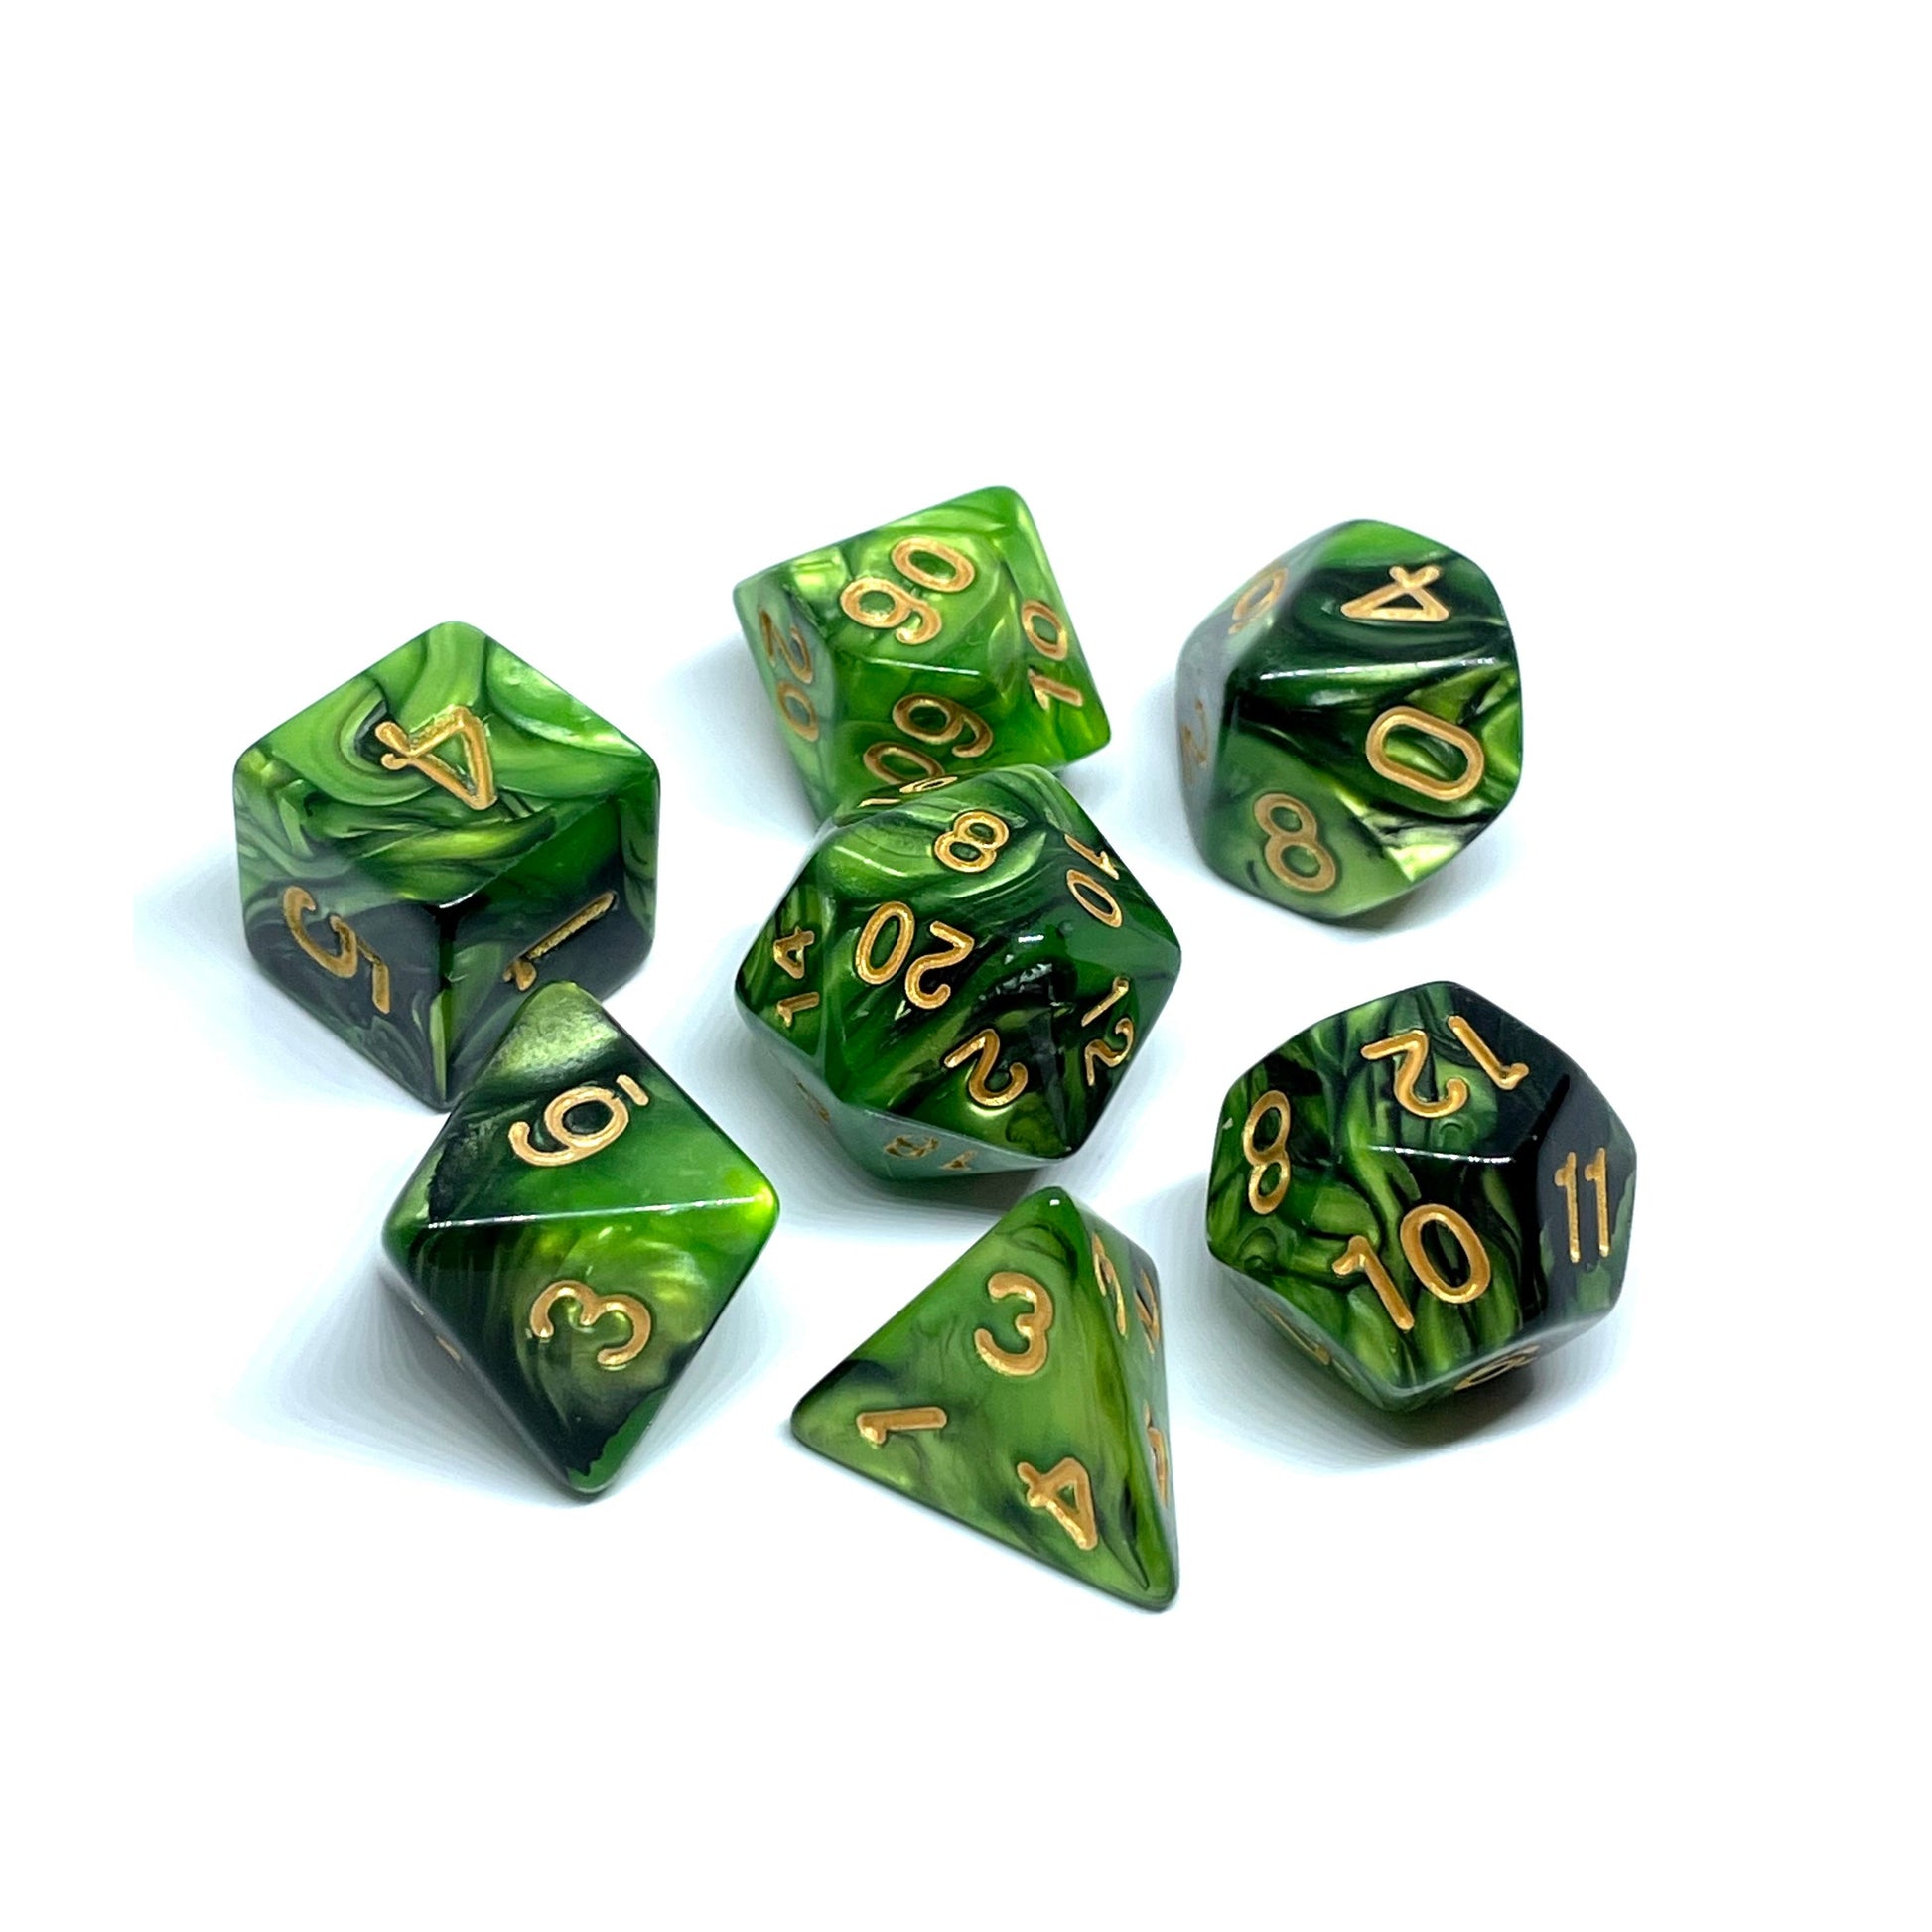 dnd dice set green and black goblin